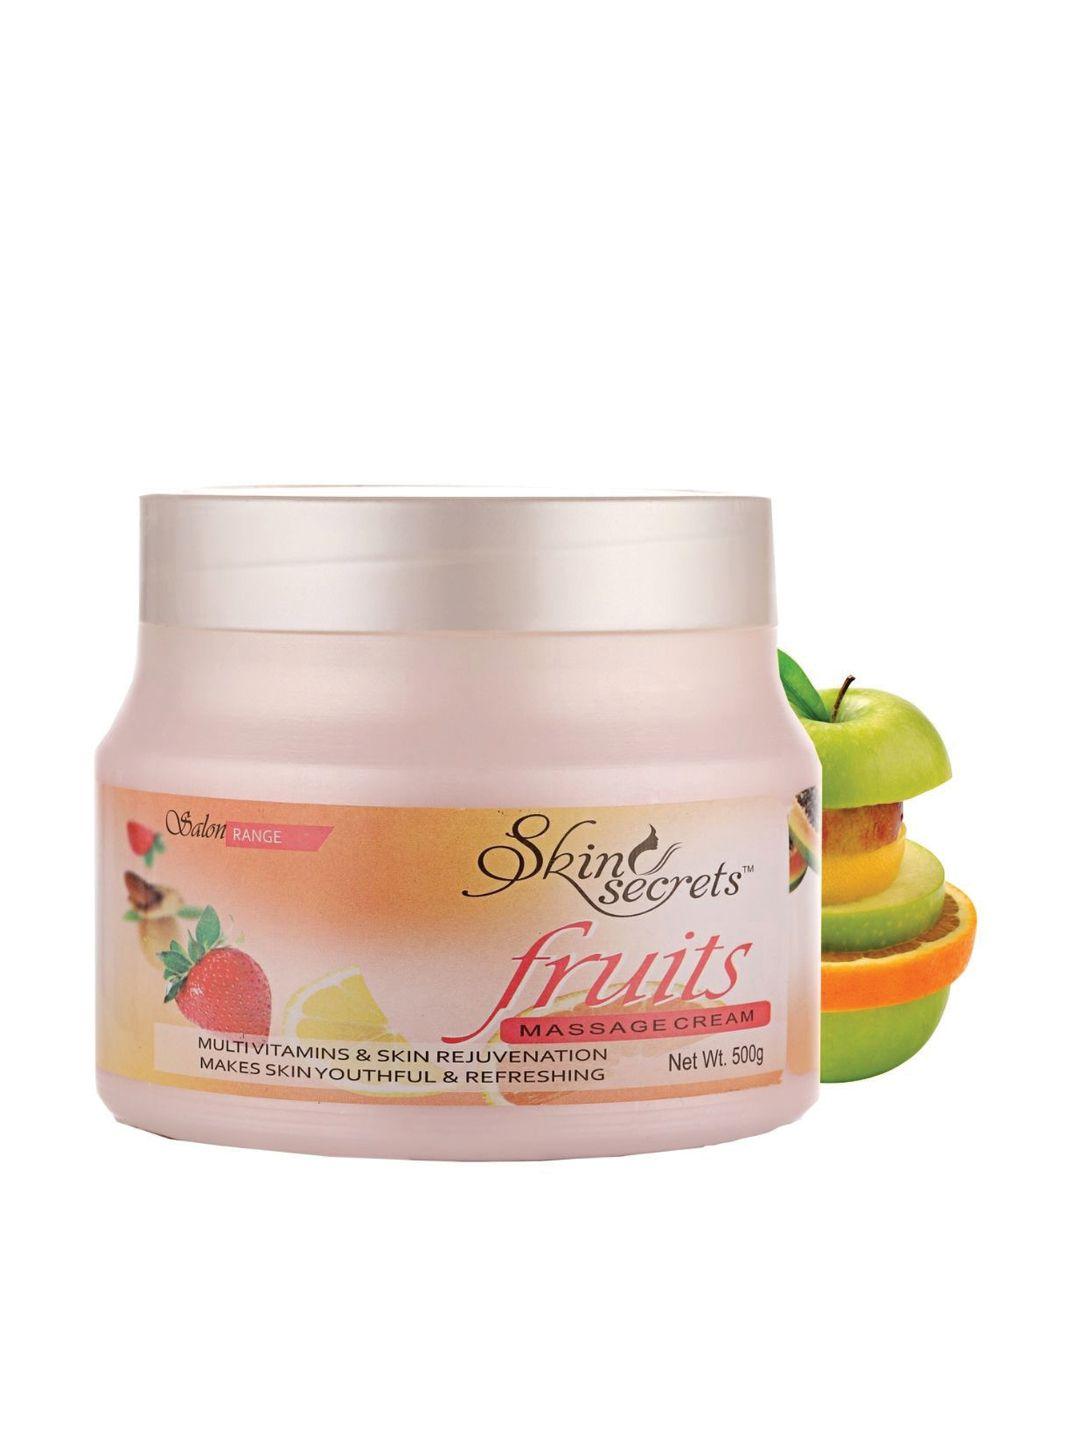 skin secrets cruelty-free fruits massage cream for skin rejuvenation - 500 g